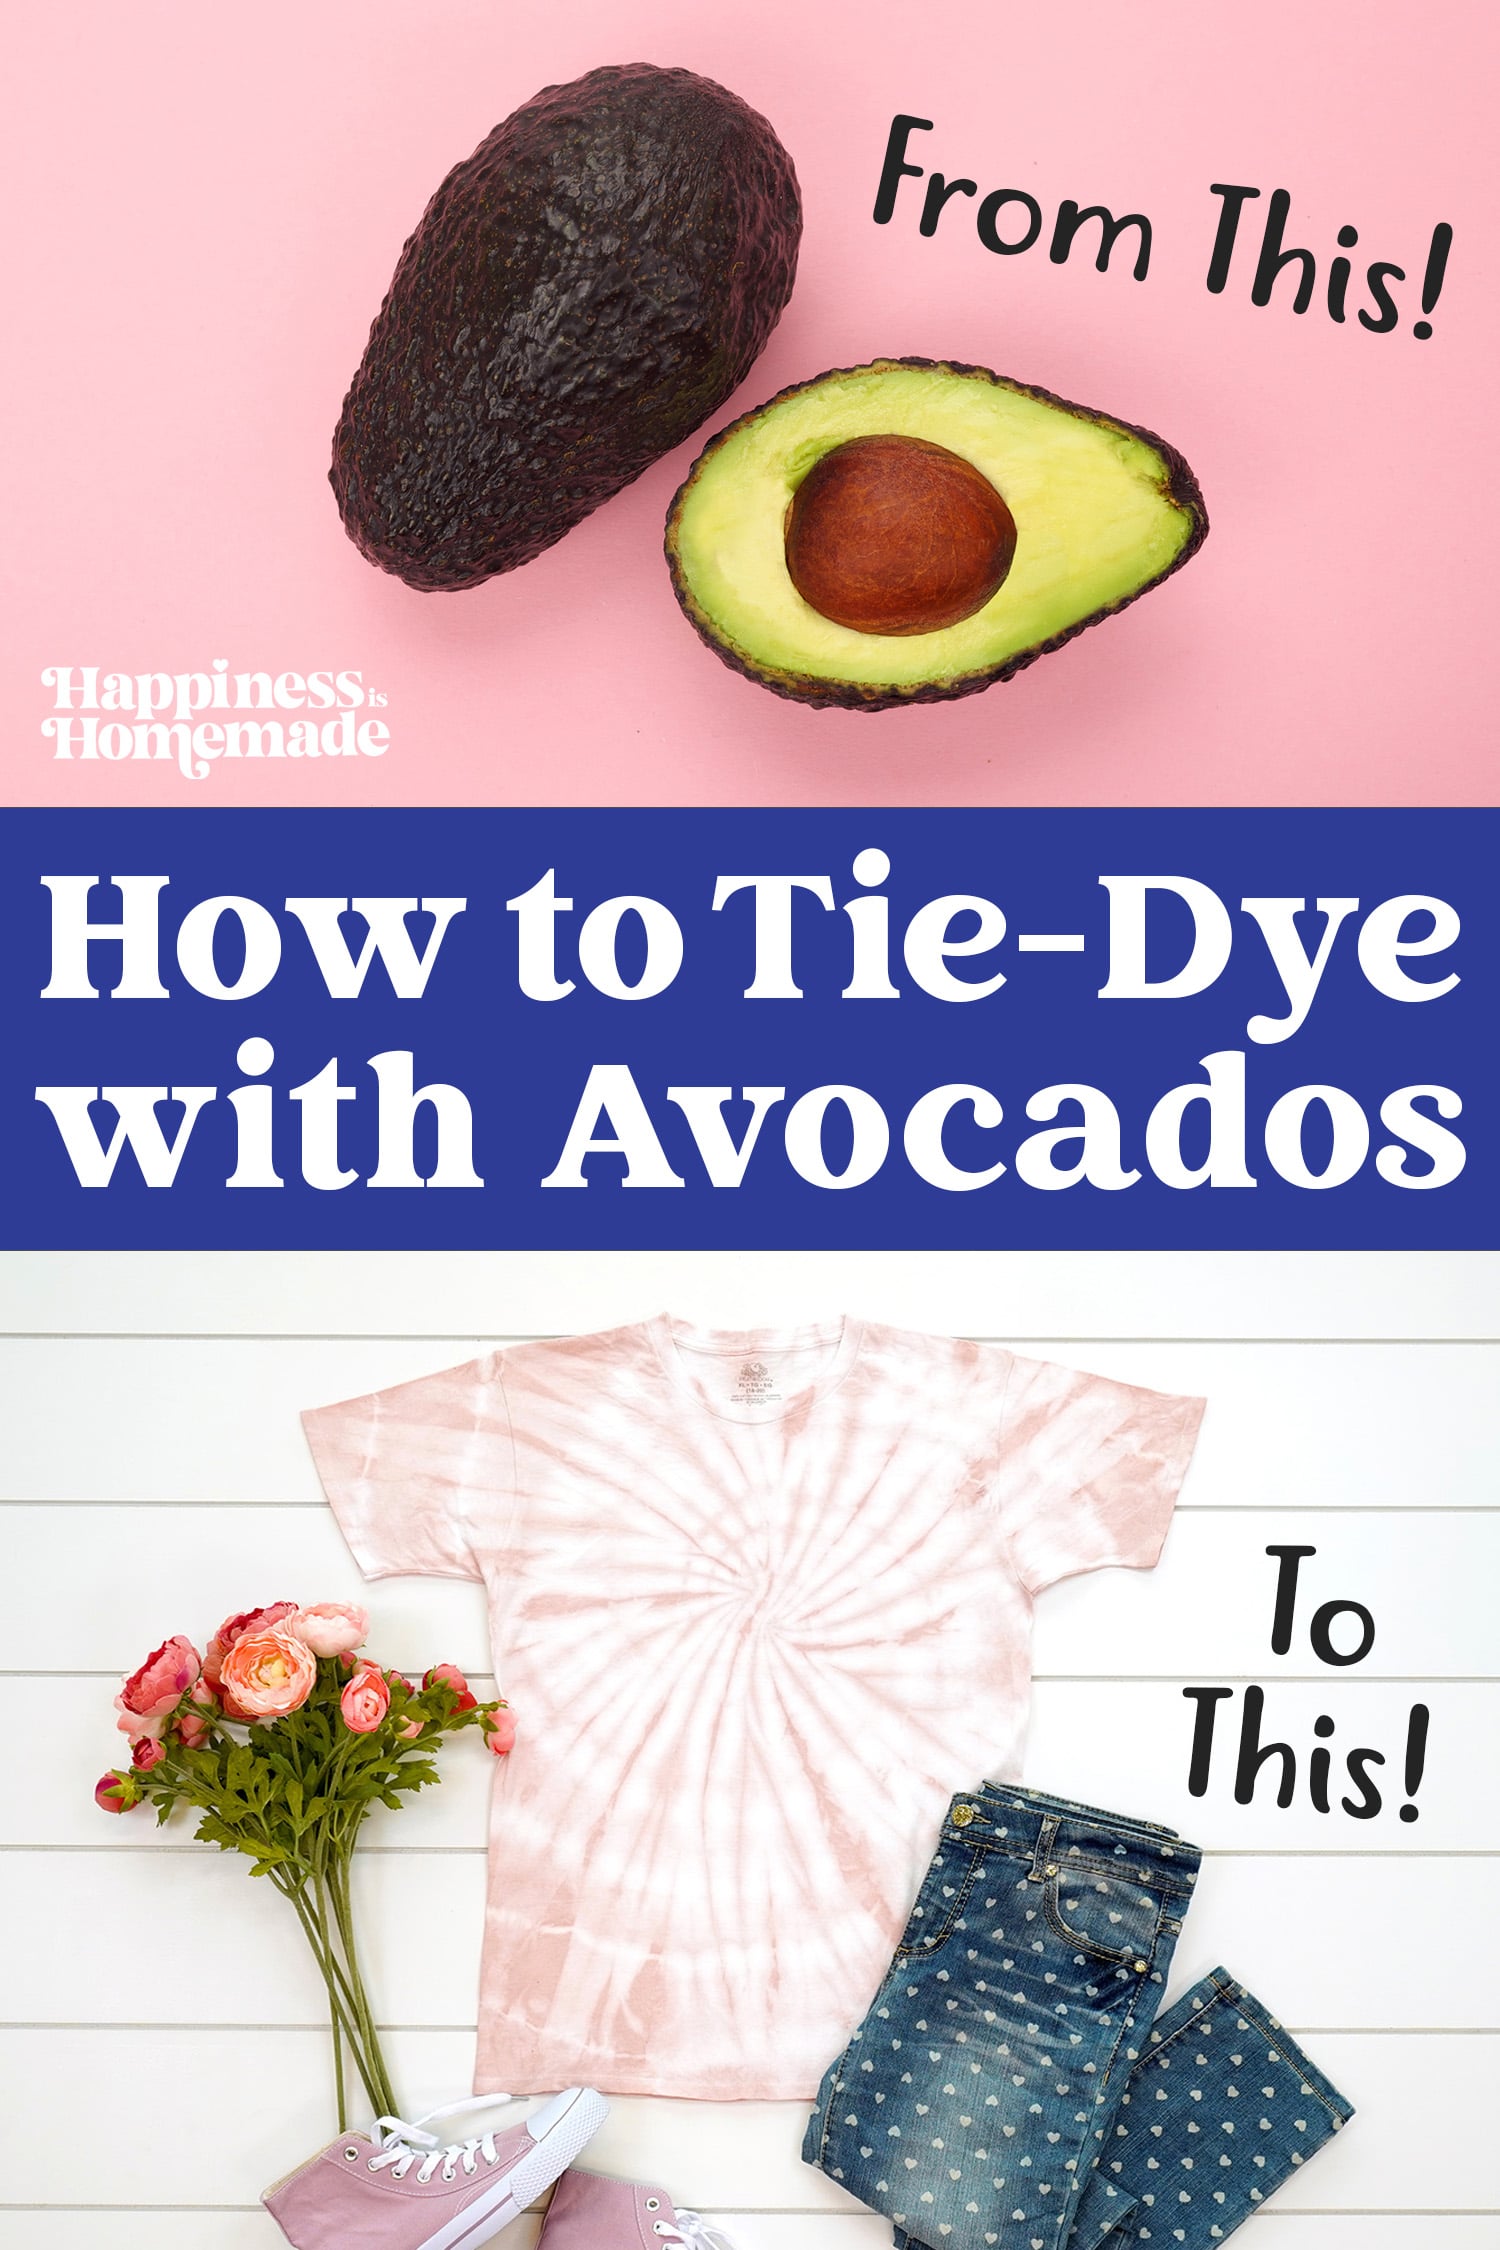 Avocado Dye: Tie-Dye with Avocado Pits!